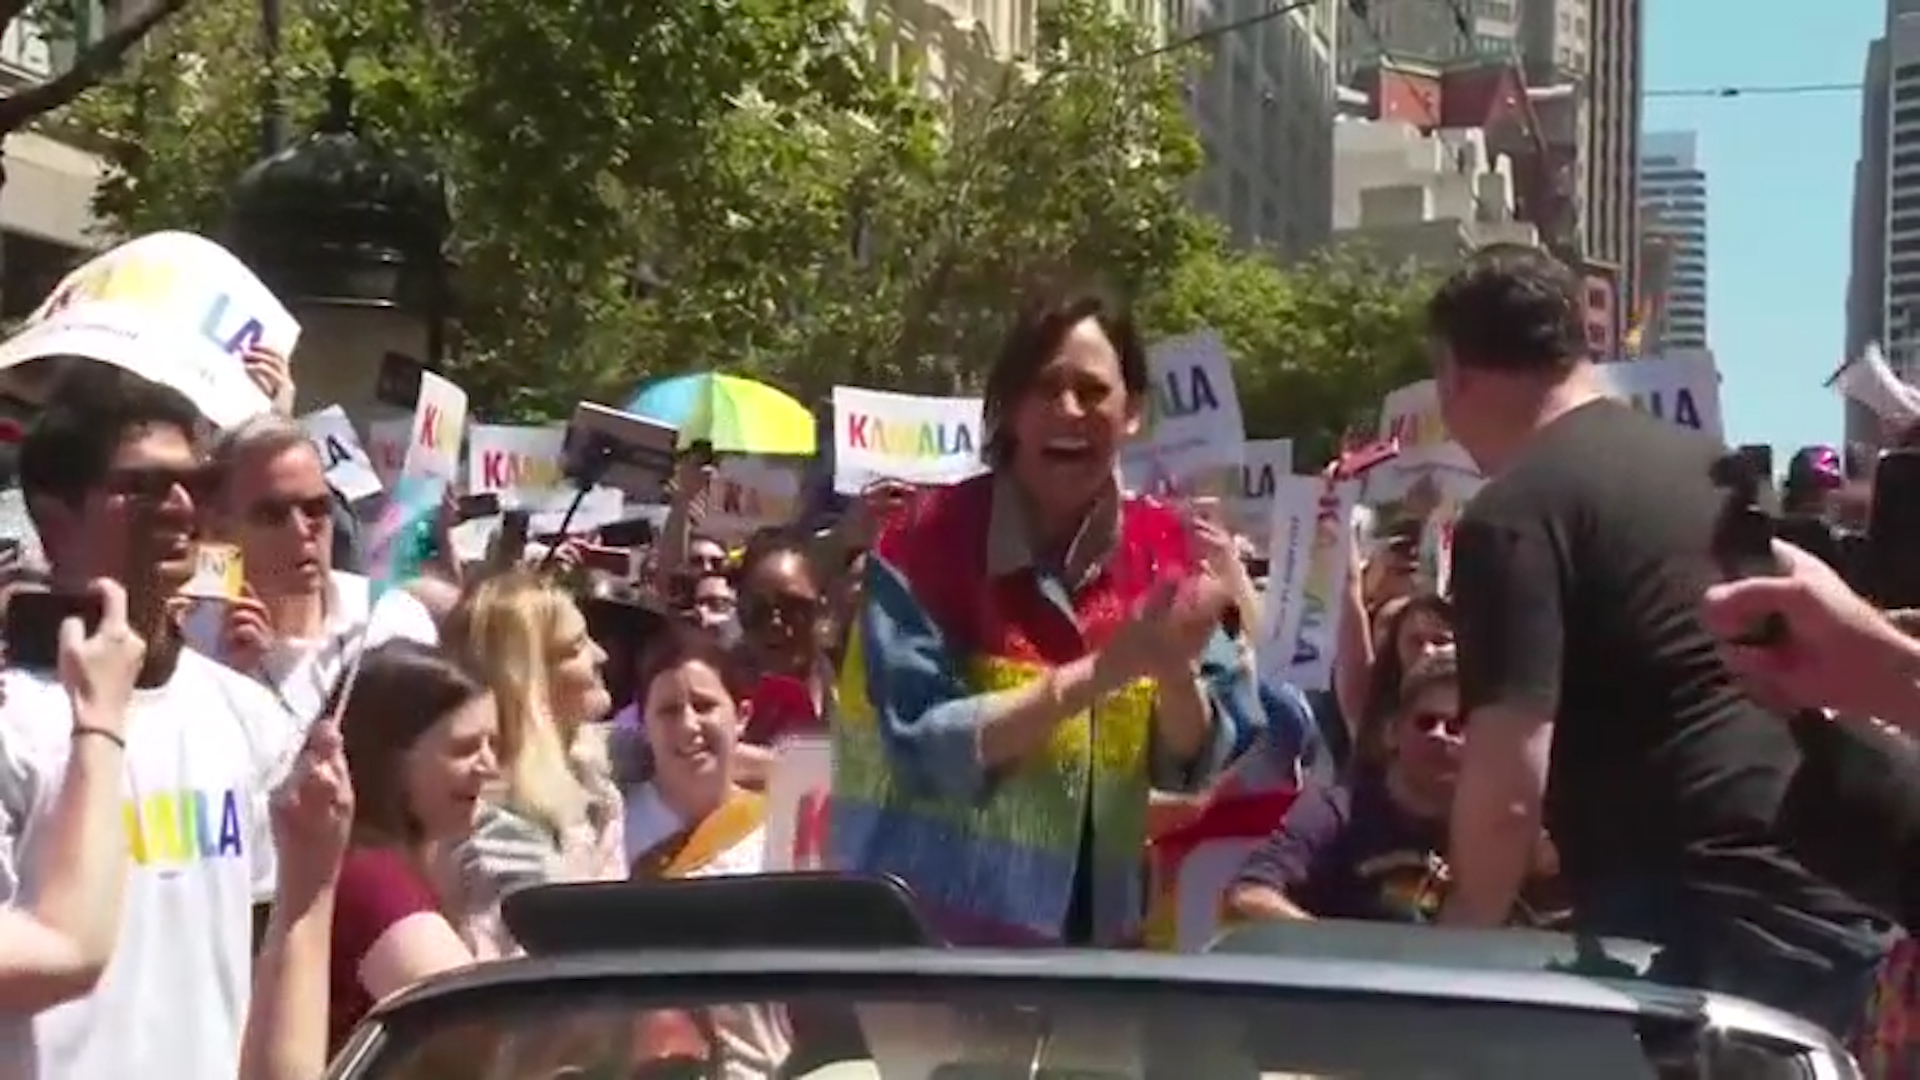 Woman painstakingly recreates Kamala Harris' rainbow Pride jacket using  35,000 rhinestones